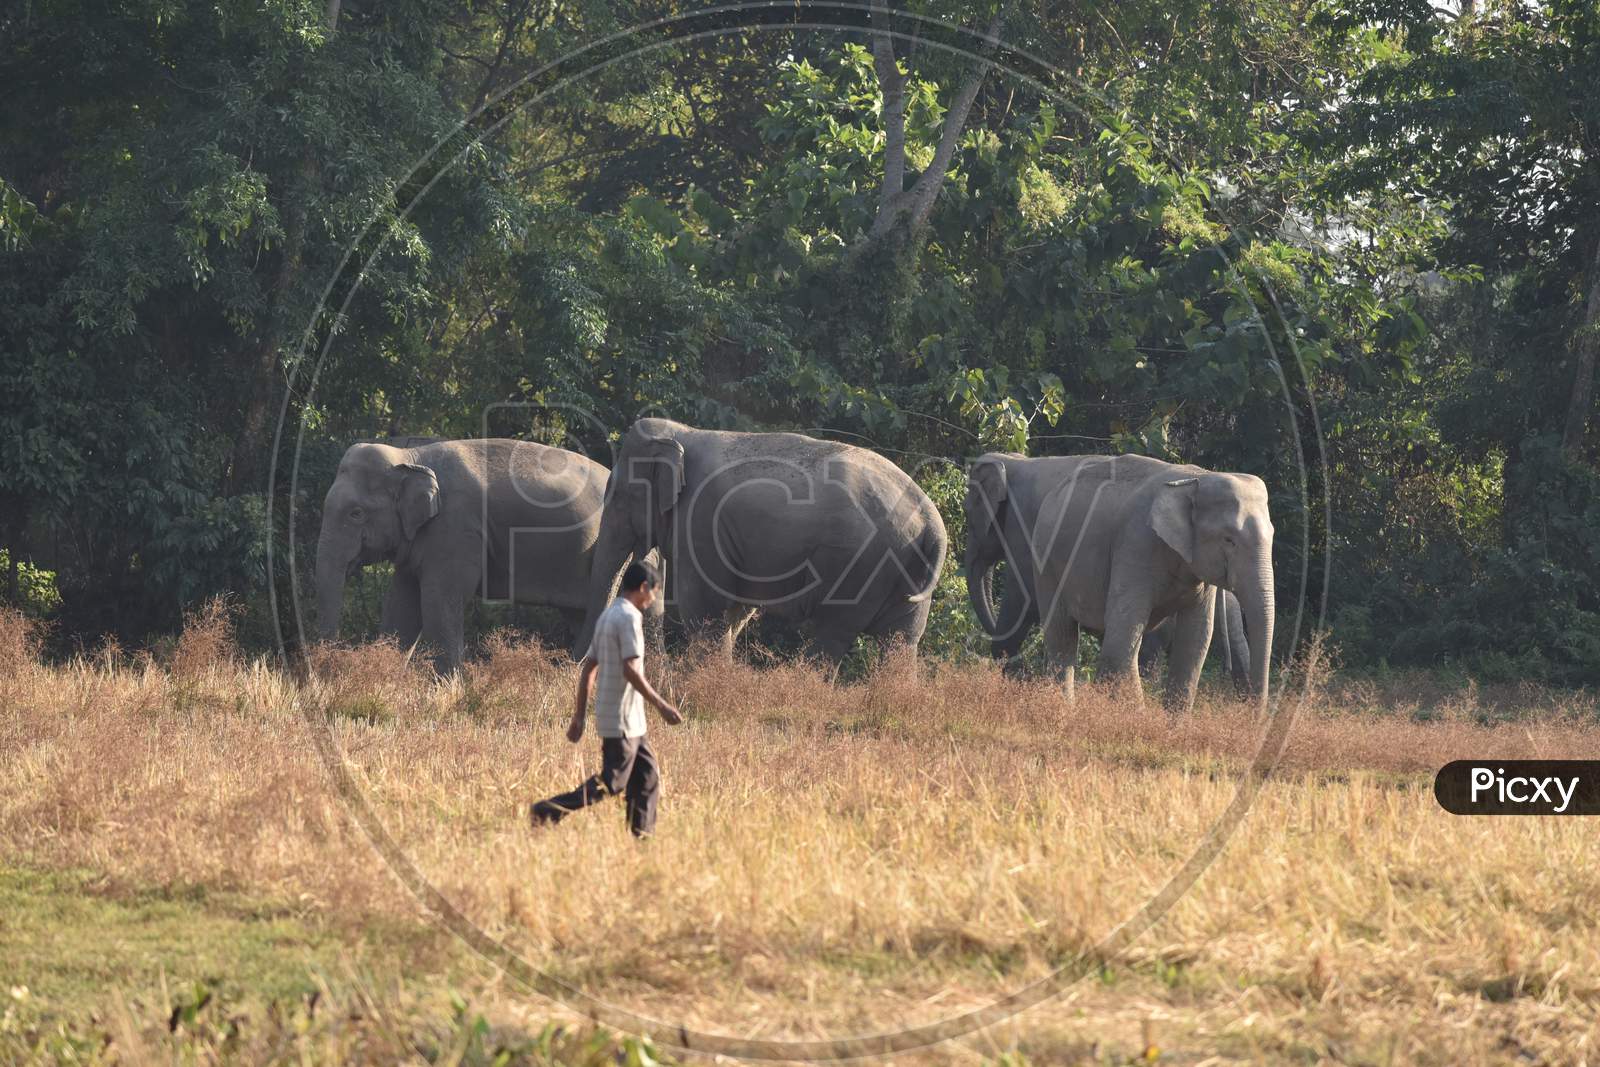 Wild Elephants In an Village Outskirts Of Nagaon, Assam